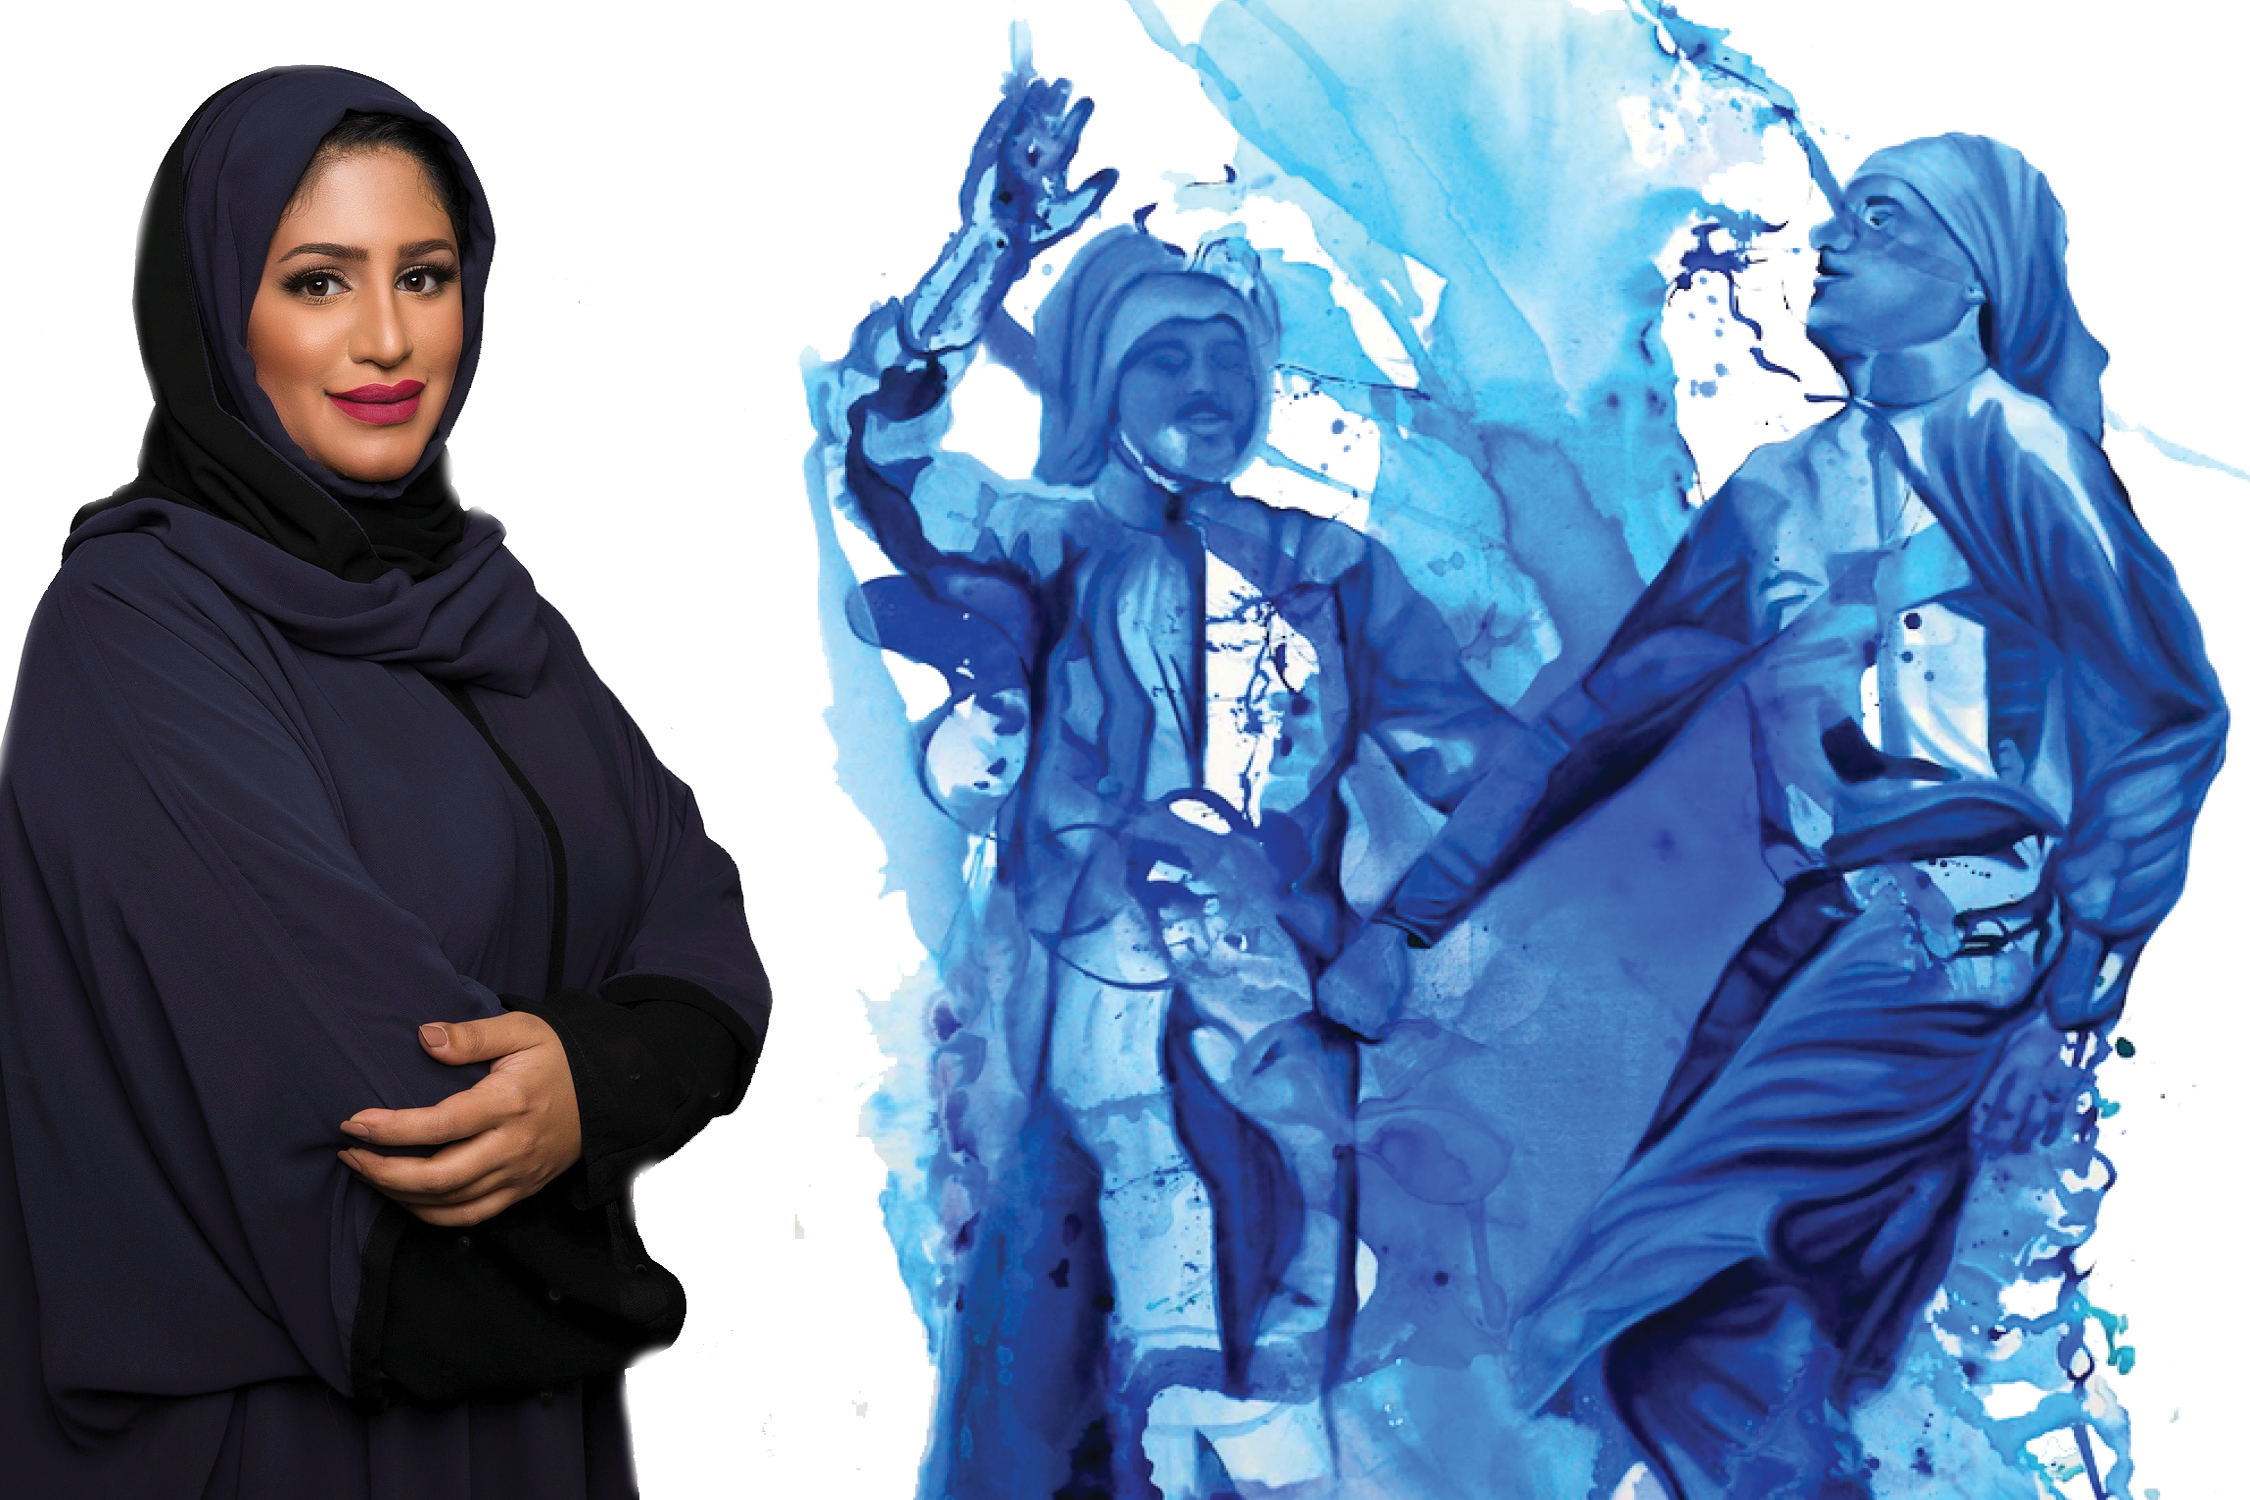 Qatari Artist Muna Al Bader creates the mural